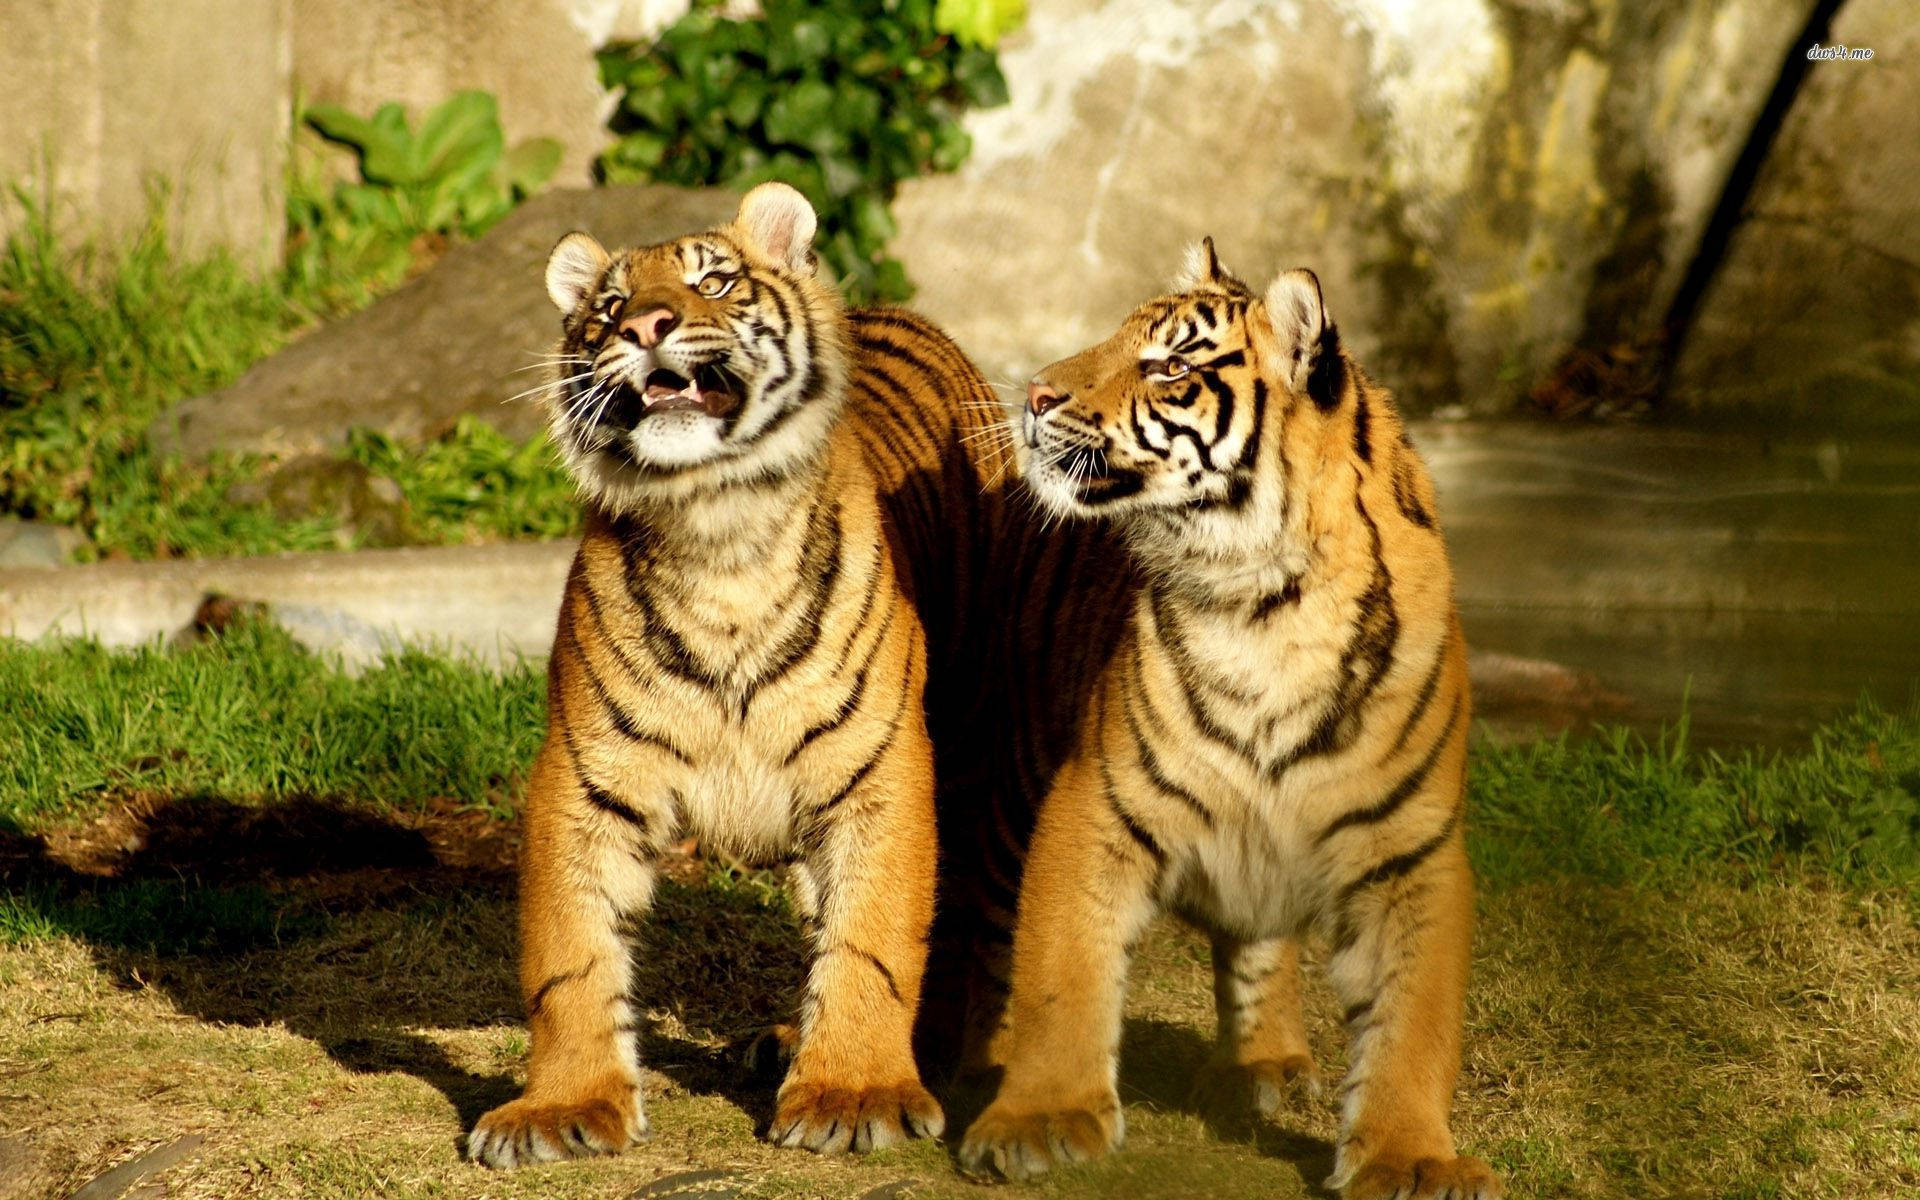 Short-legged Baby Tigers